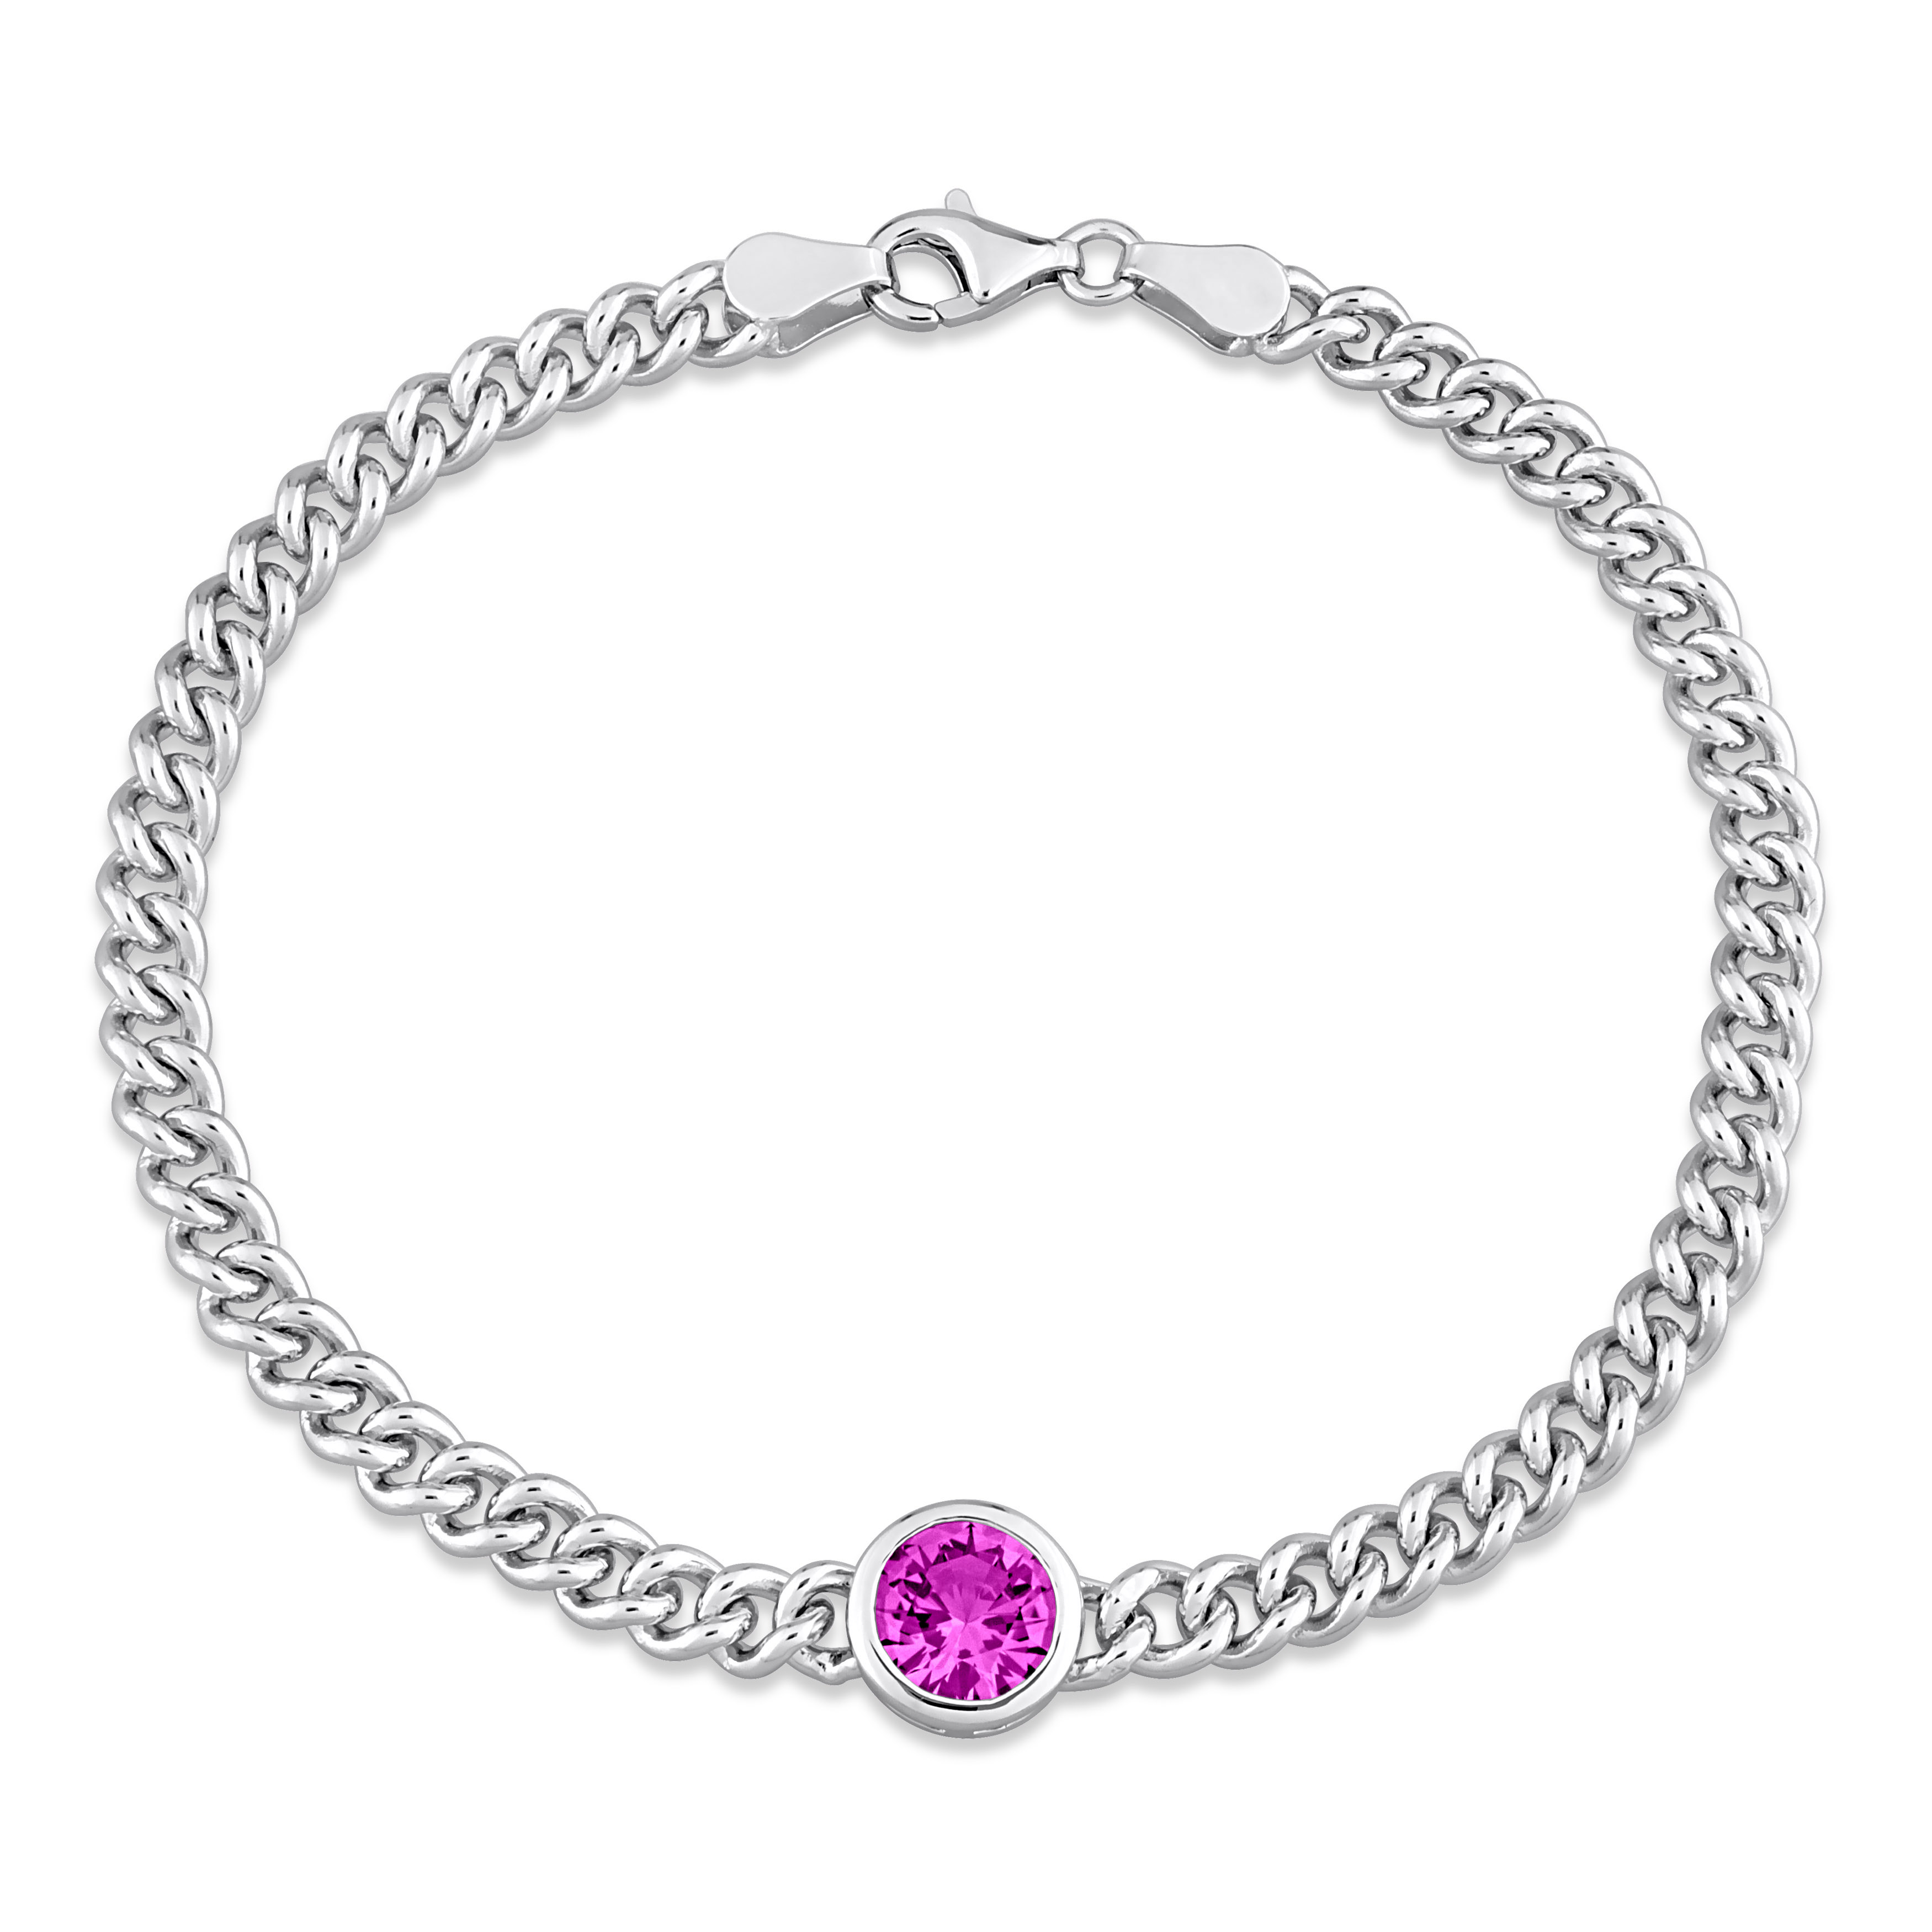 1 5/8 CT TGW Created Pink Sapphire Bracelet in Sterling Silver  - 7.5 in.